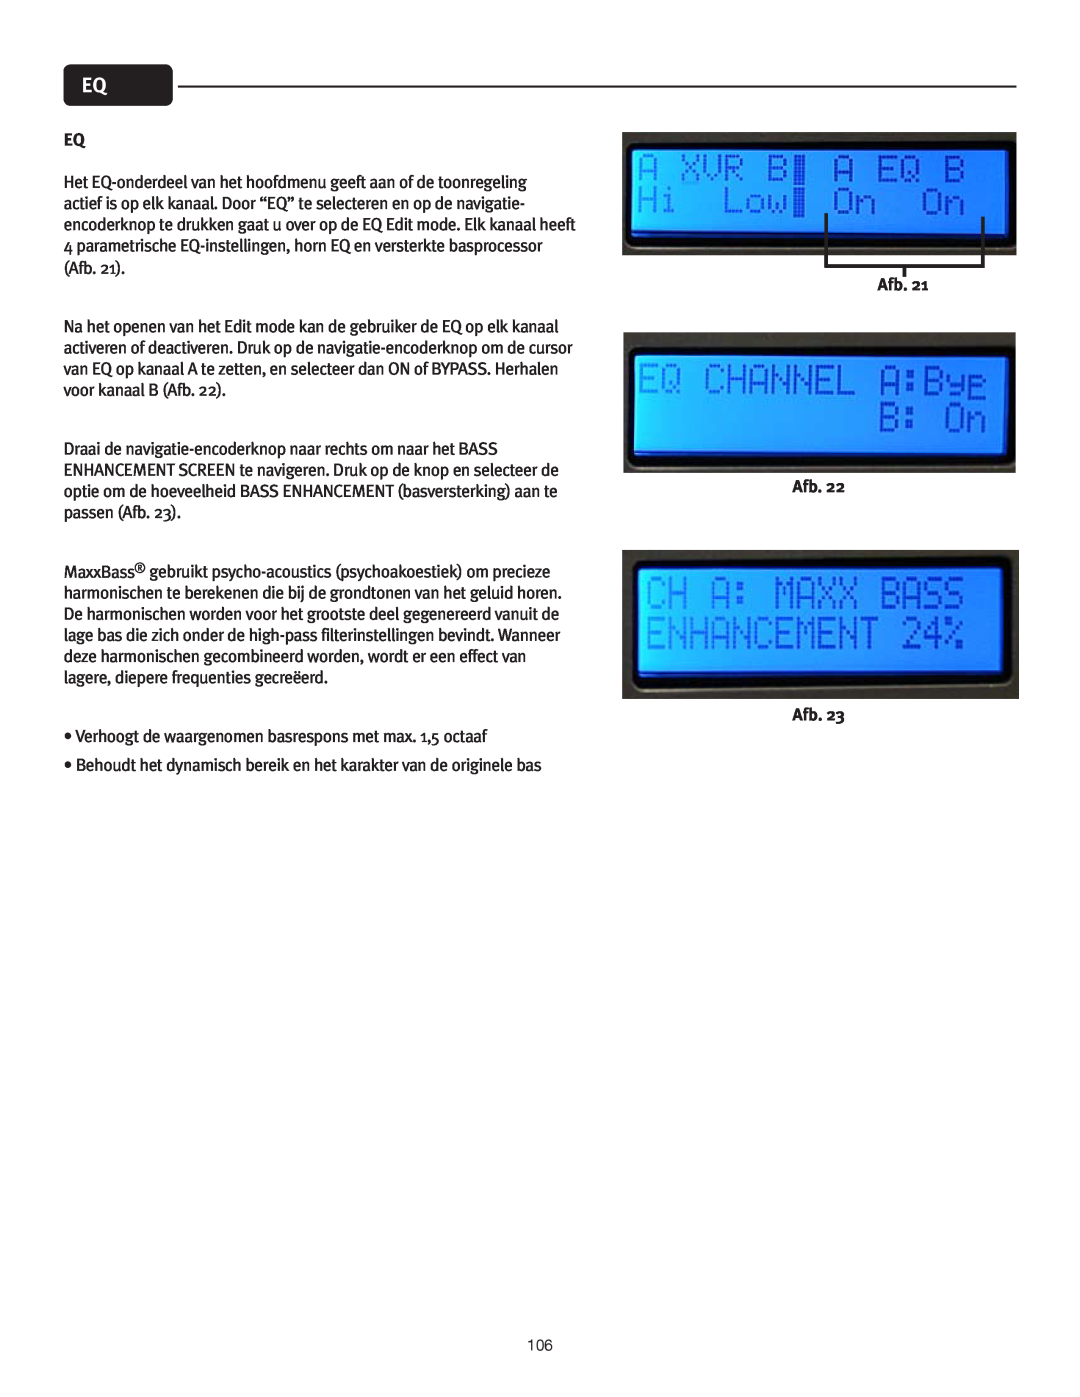 Peavey IPR 4500, IPR 3000, IPR 6000, IPR 1600 manual Verhoogt de waargenomen basrespons met max. 1,5 octaaf, Afb Afb Afb 